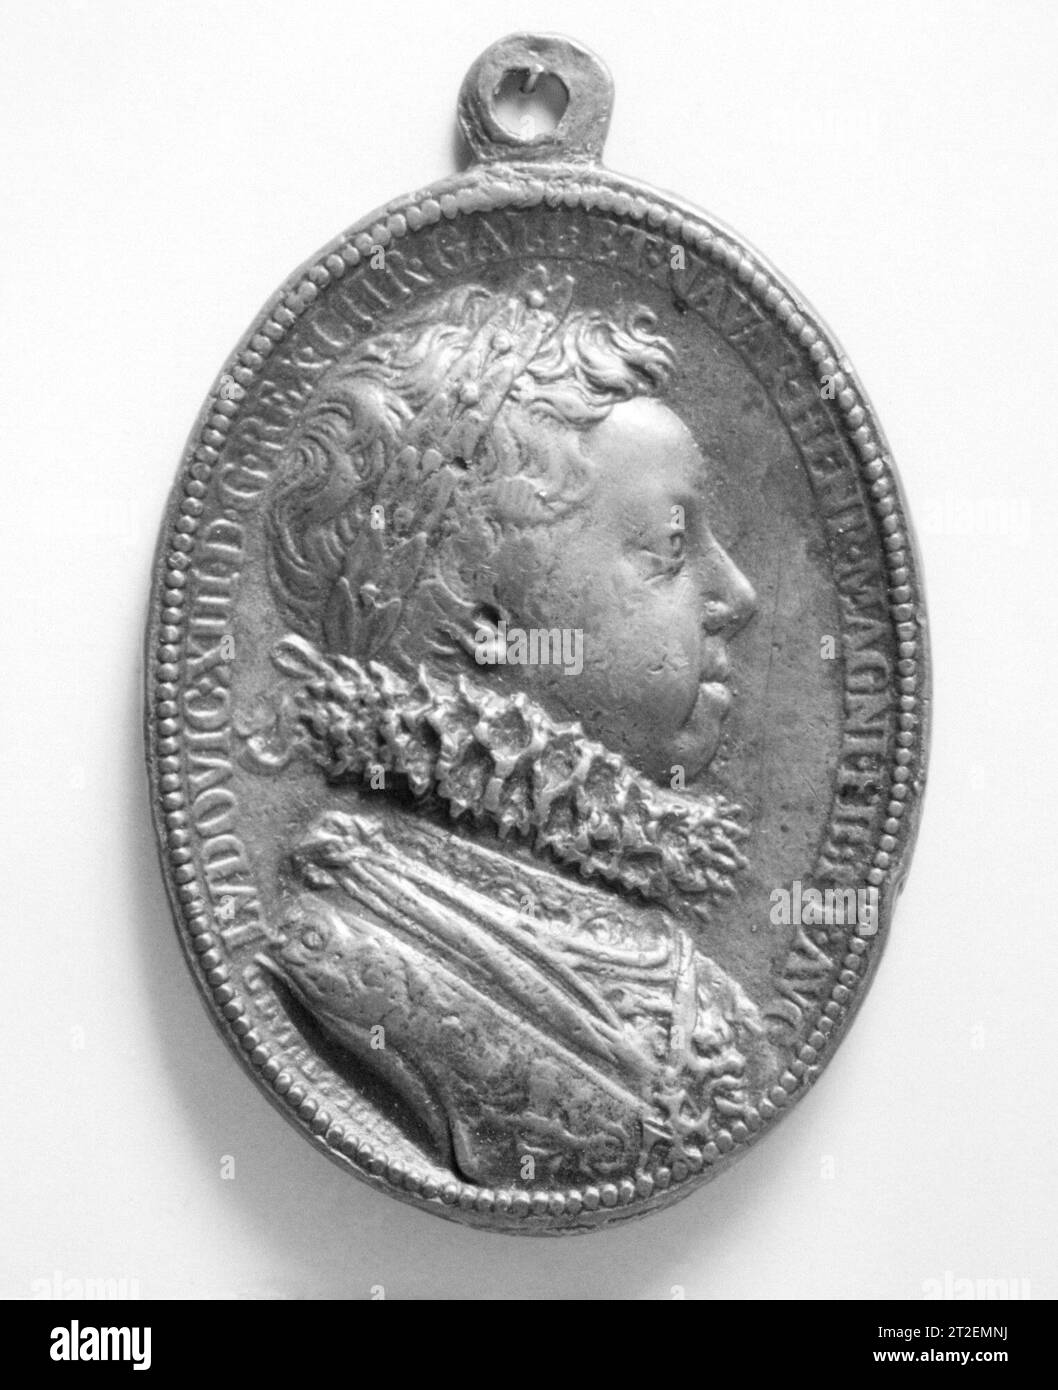 Philippe de Champaigne (1602-74) - Louis XIII, King of France (1601-43)